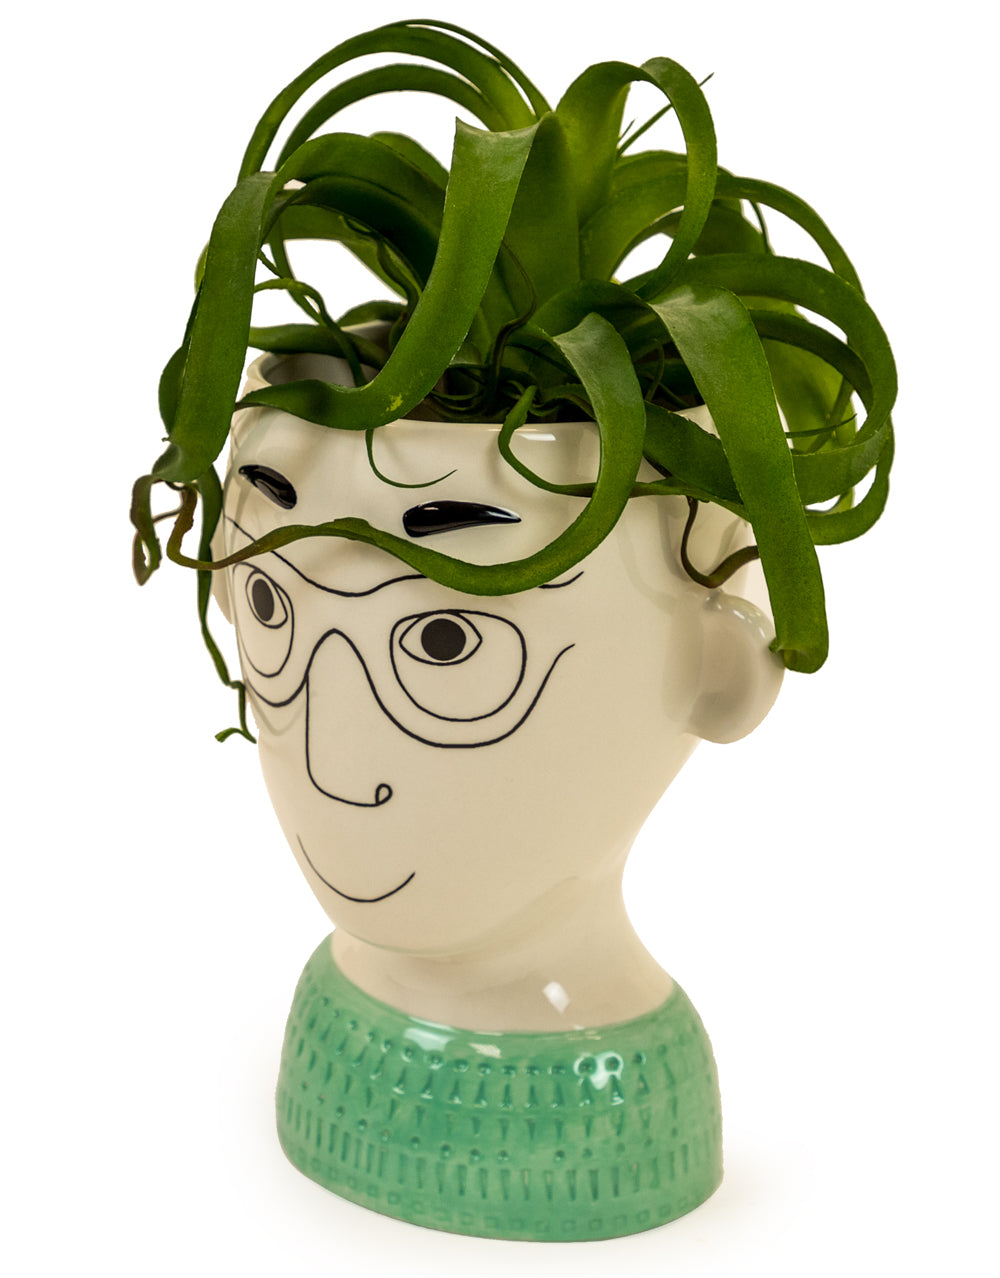 Ceramic Doodle Man's Face Vase - Glasses